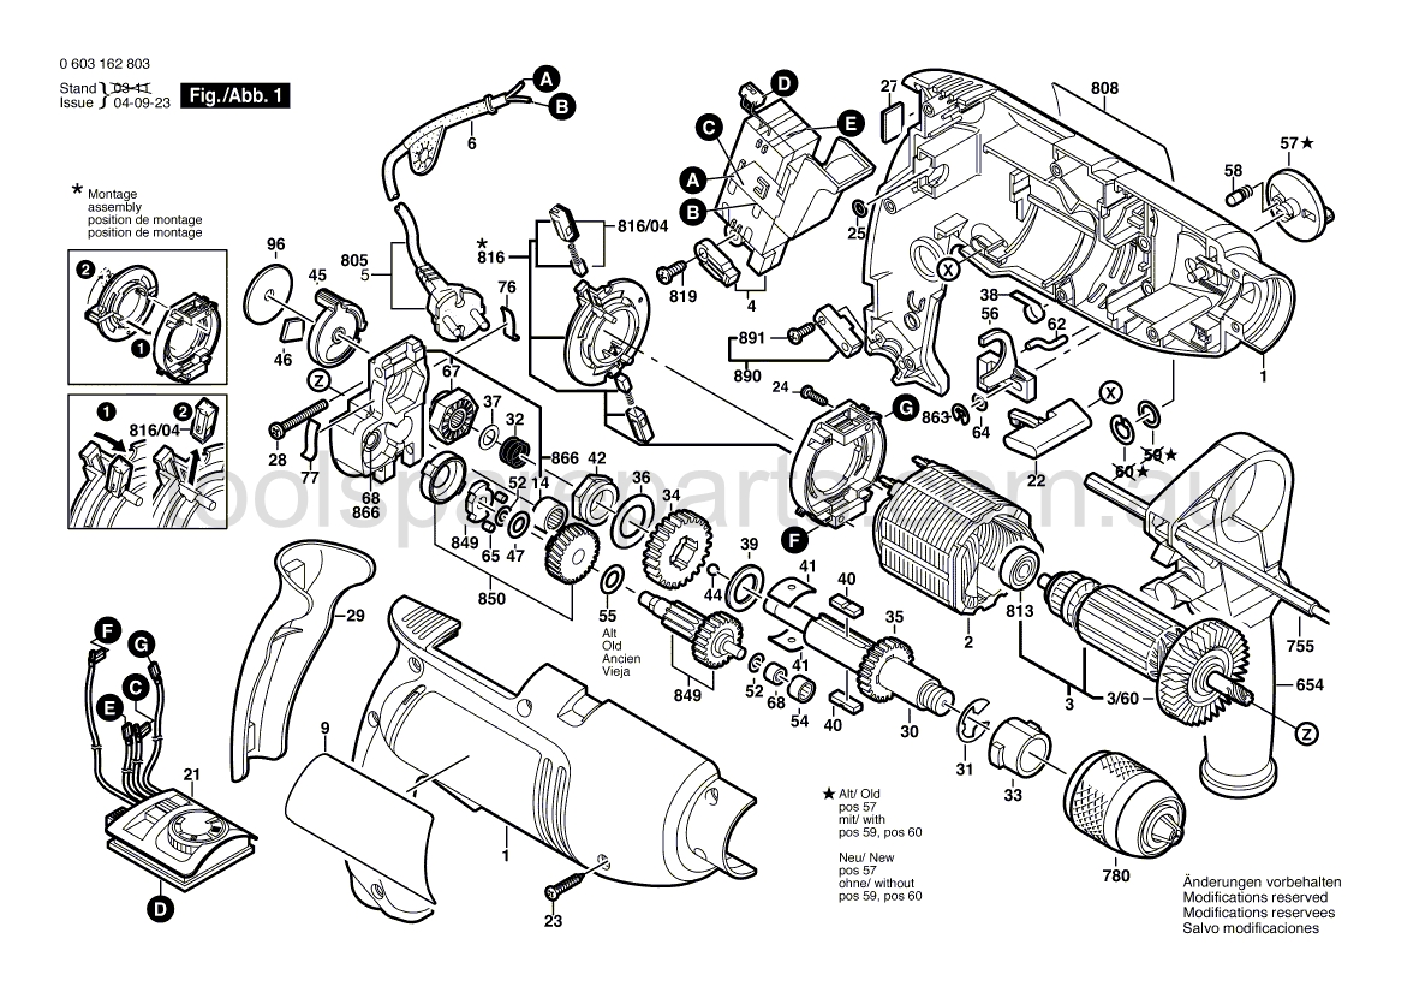 Bosch PSB 750-2 RPE 0603162837  Diagram 1